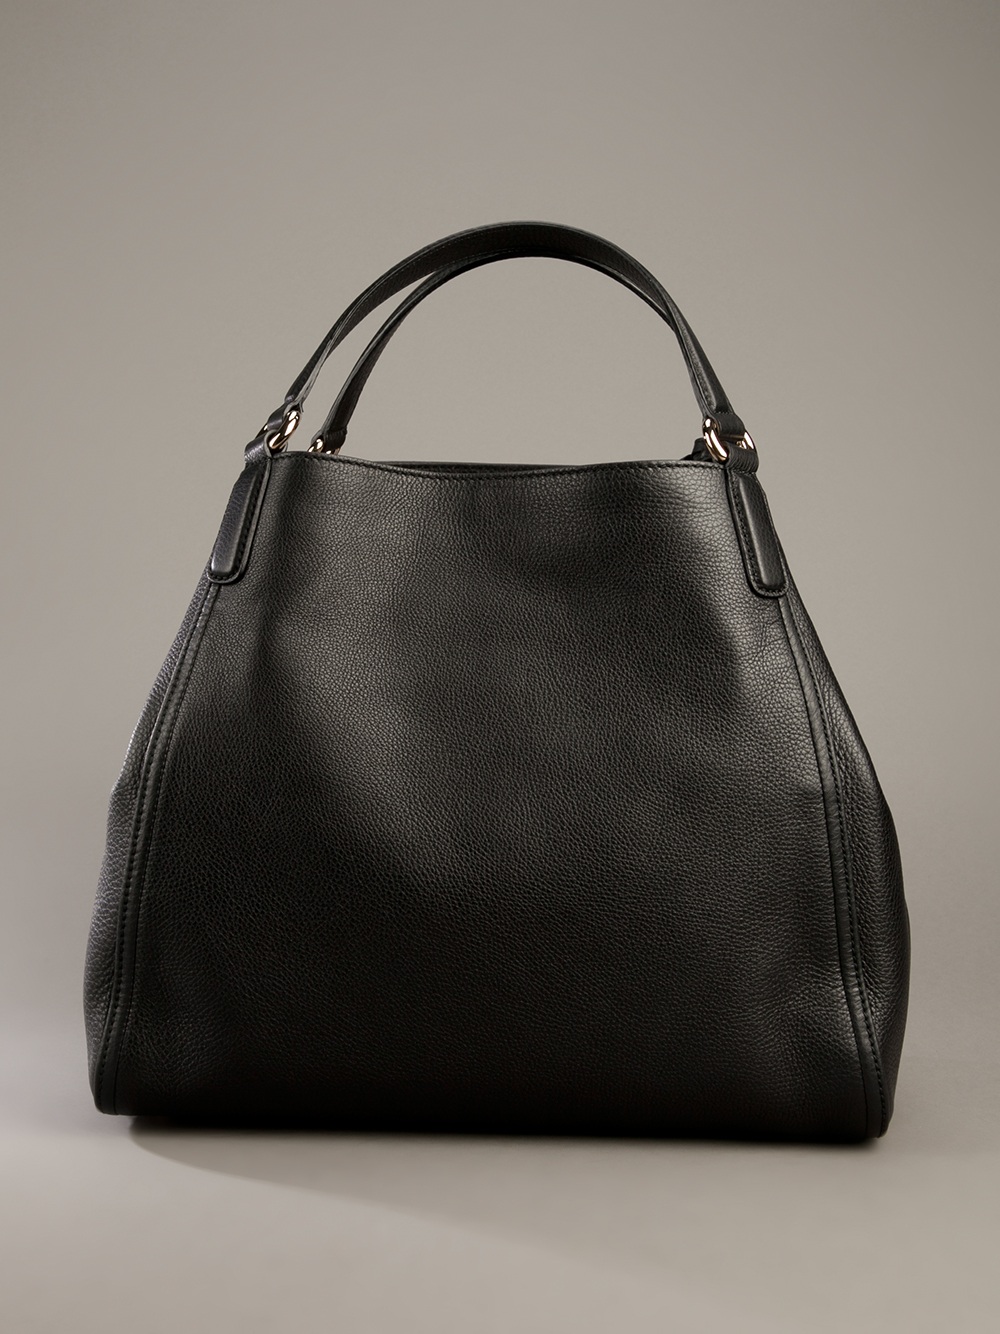 Gucci Soho Tote Bag in Black - Lyst